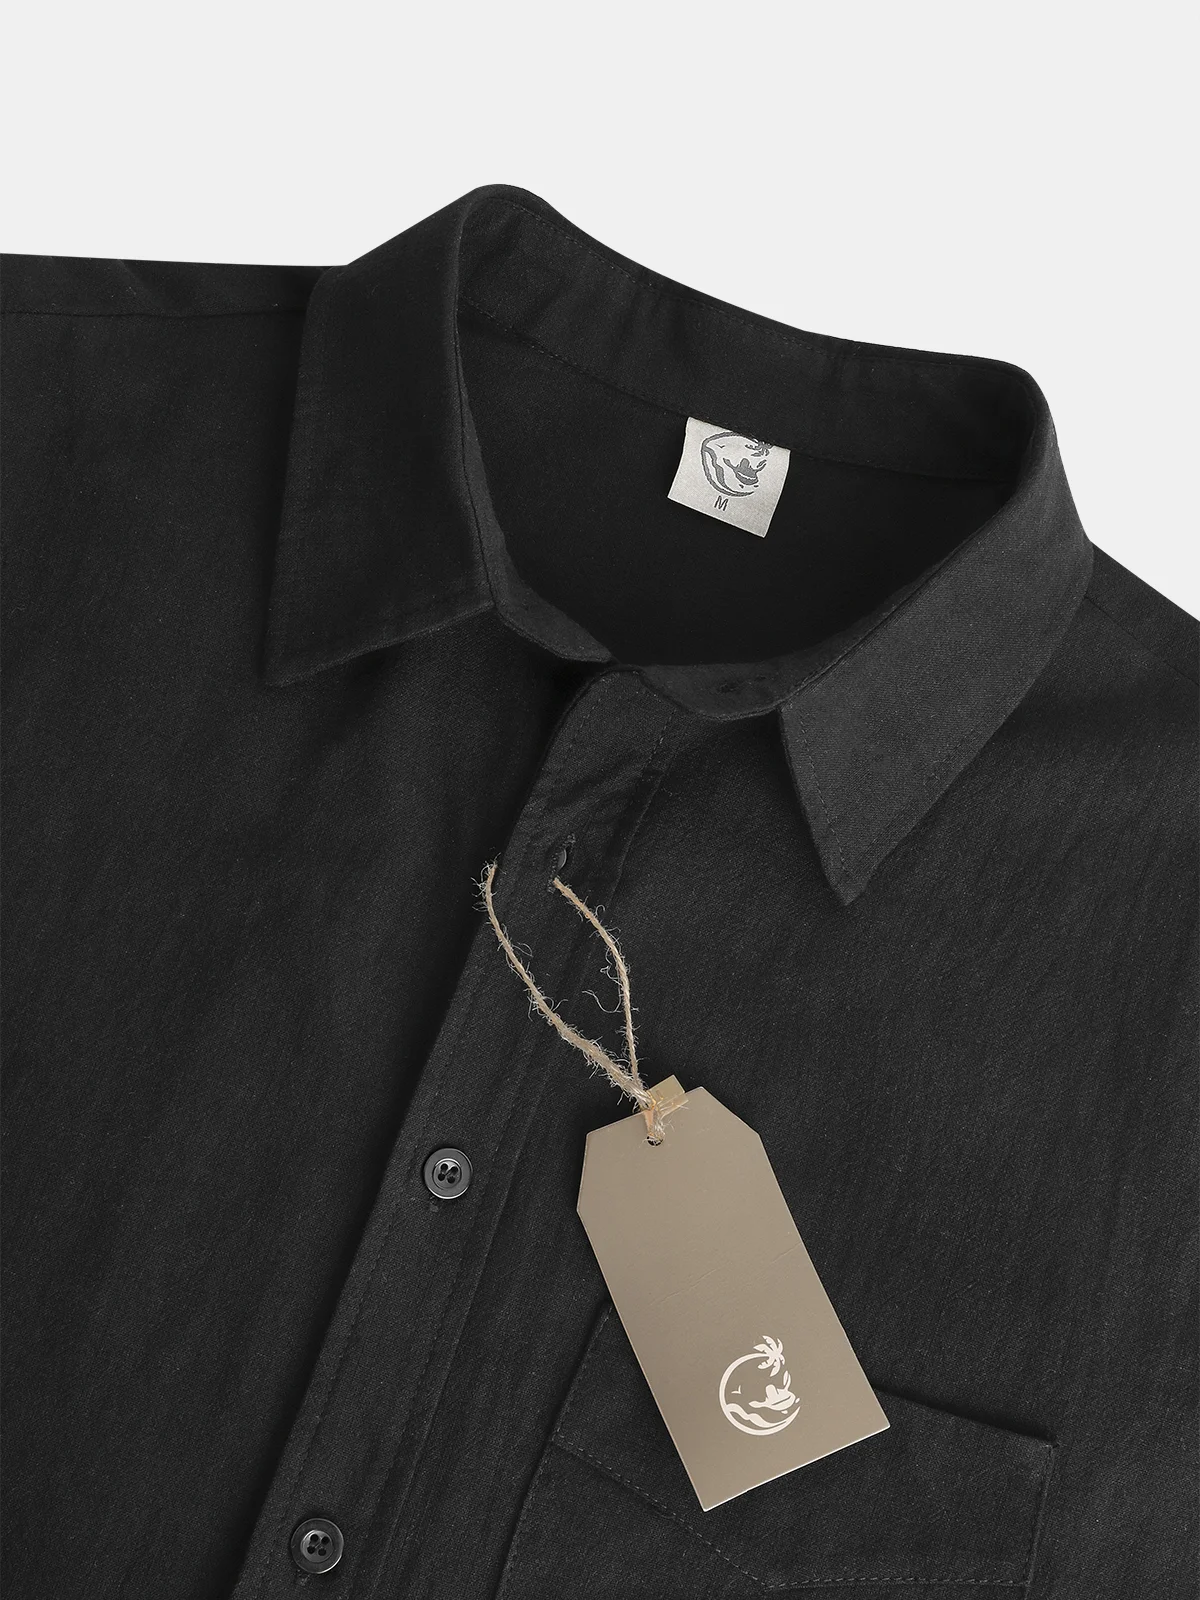 Hardaddy Men's Cotton Linen Casual Pocket Long Sleeve Shirt